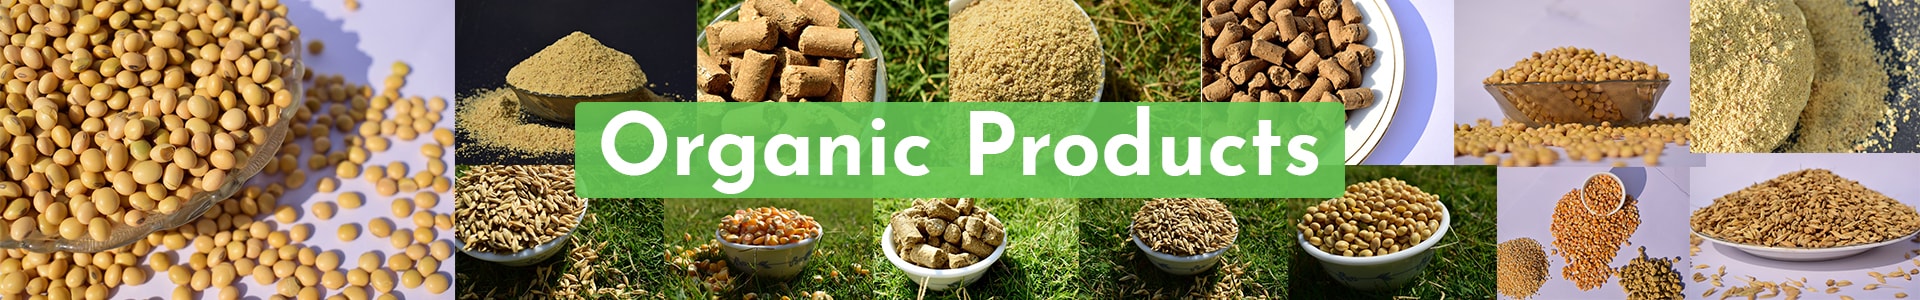 Organic Products - Unique Organics Ltd.